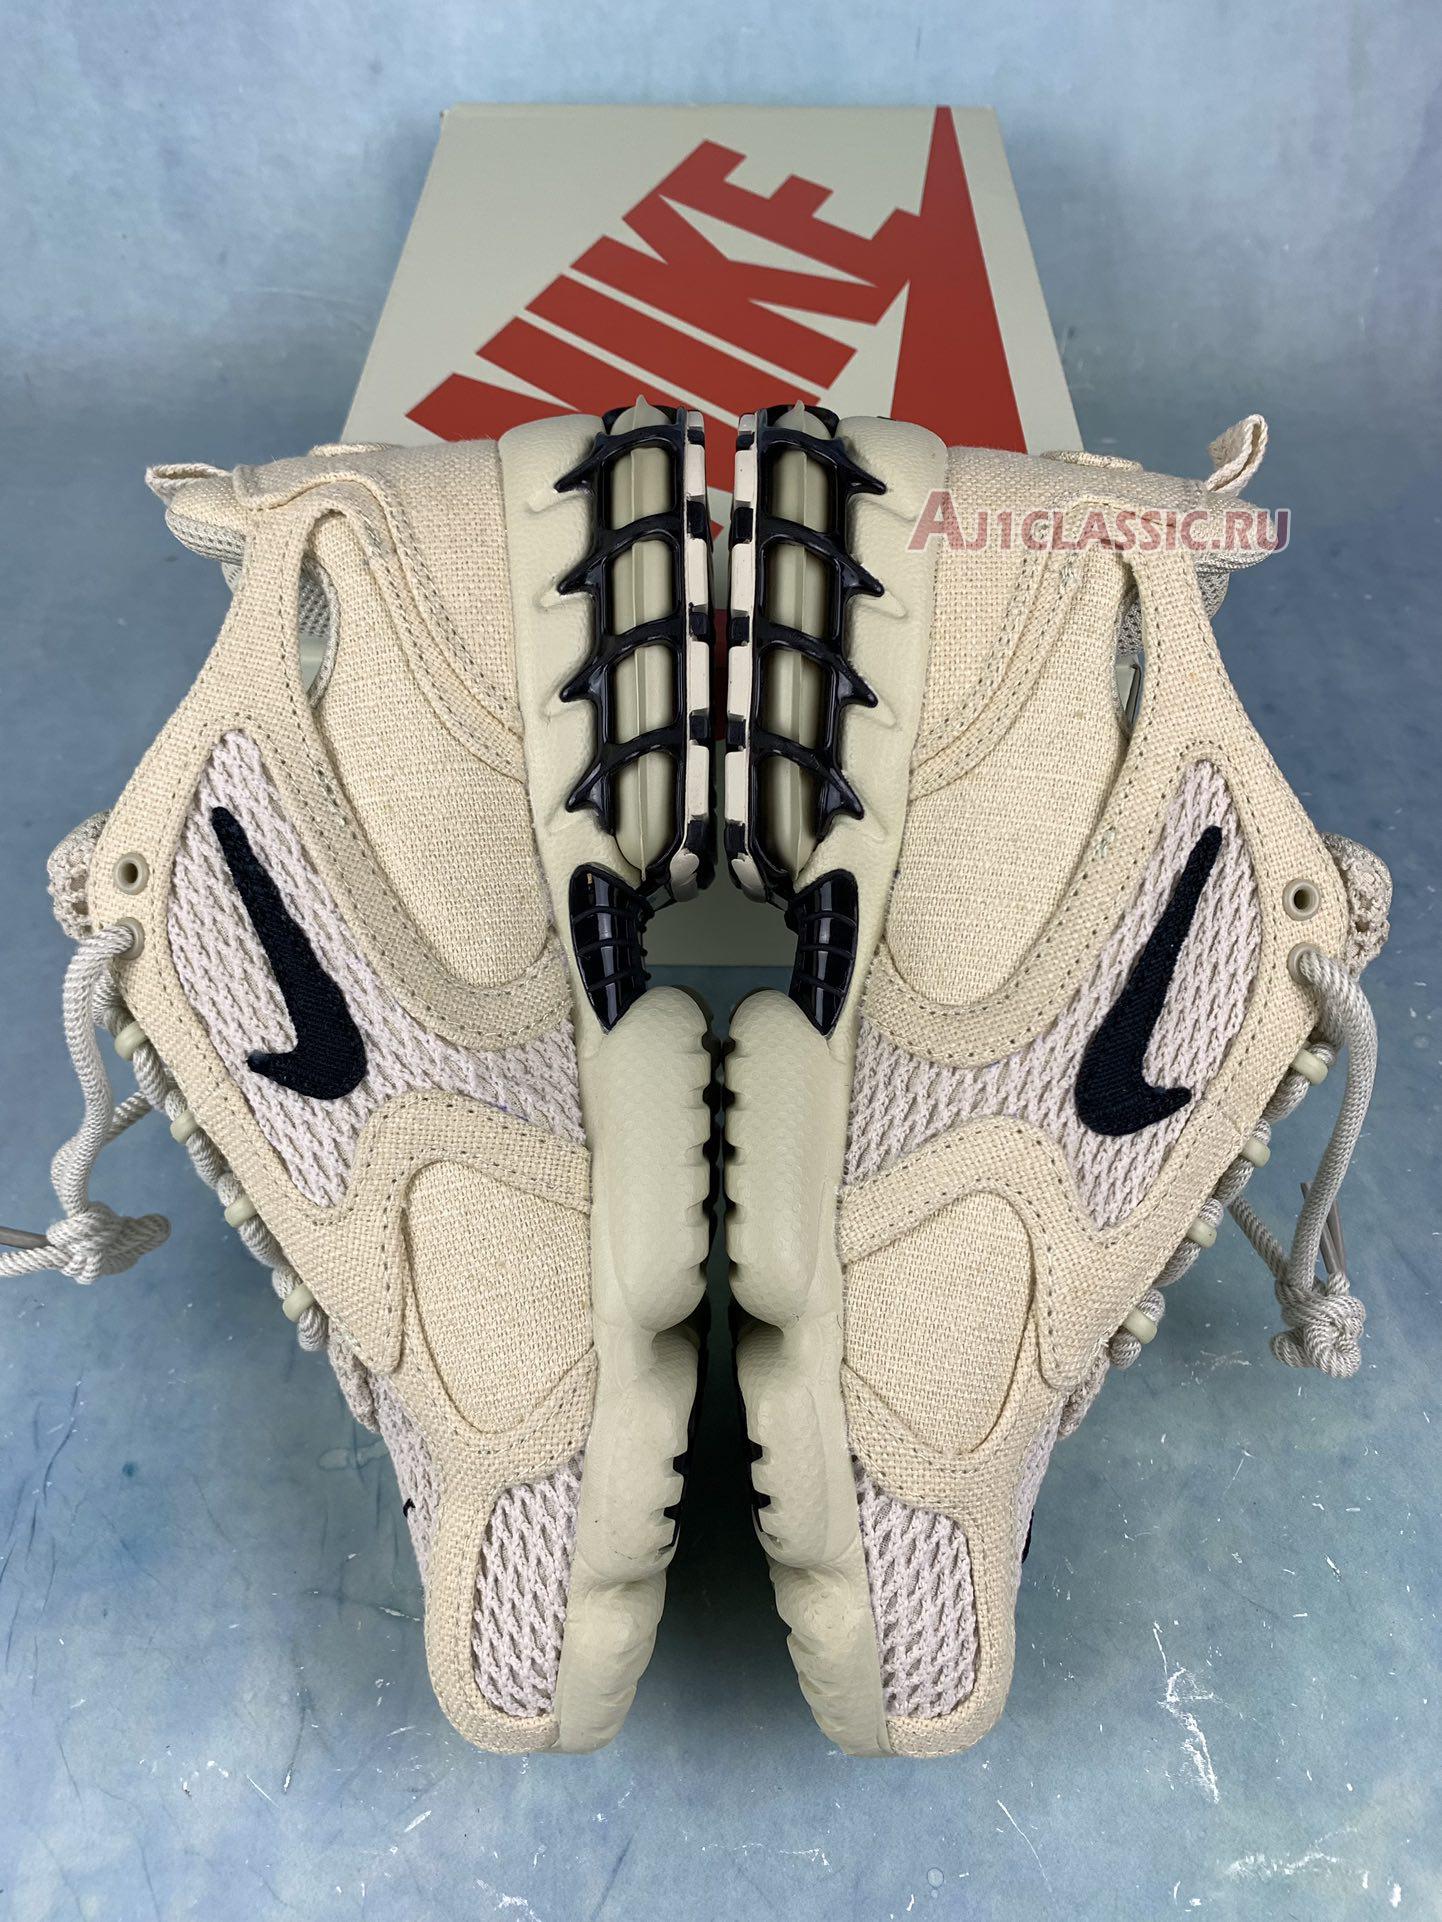 Stussy x Nike Air Zoom Spiridon Caged 2 "Fossil" CQ5486-200